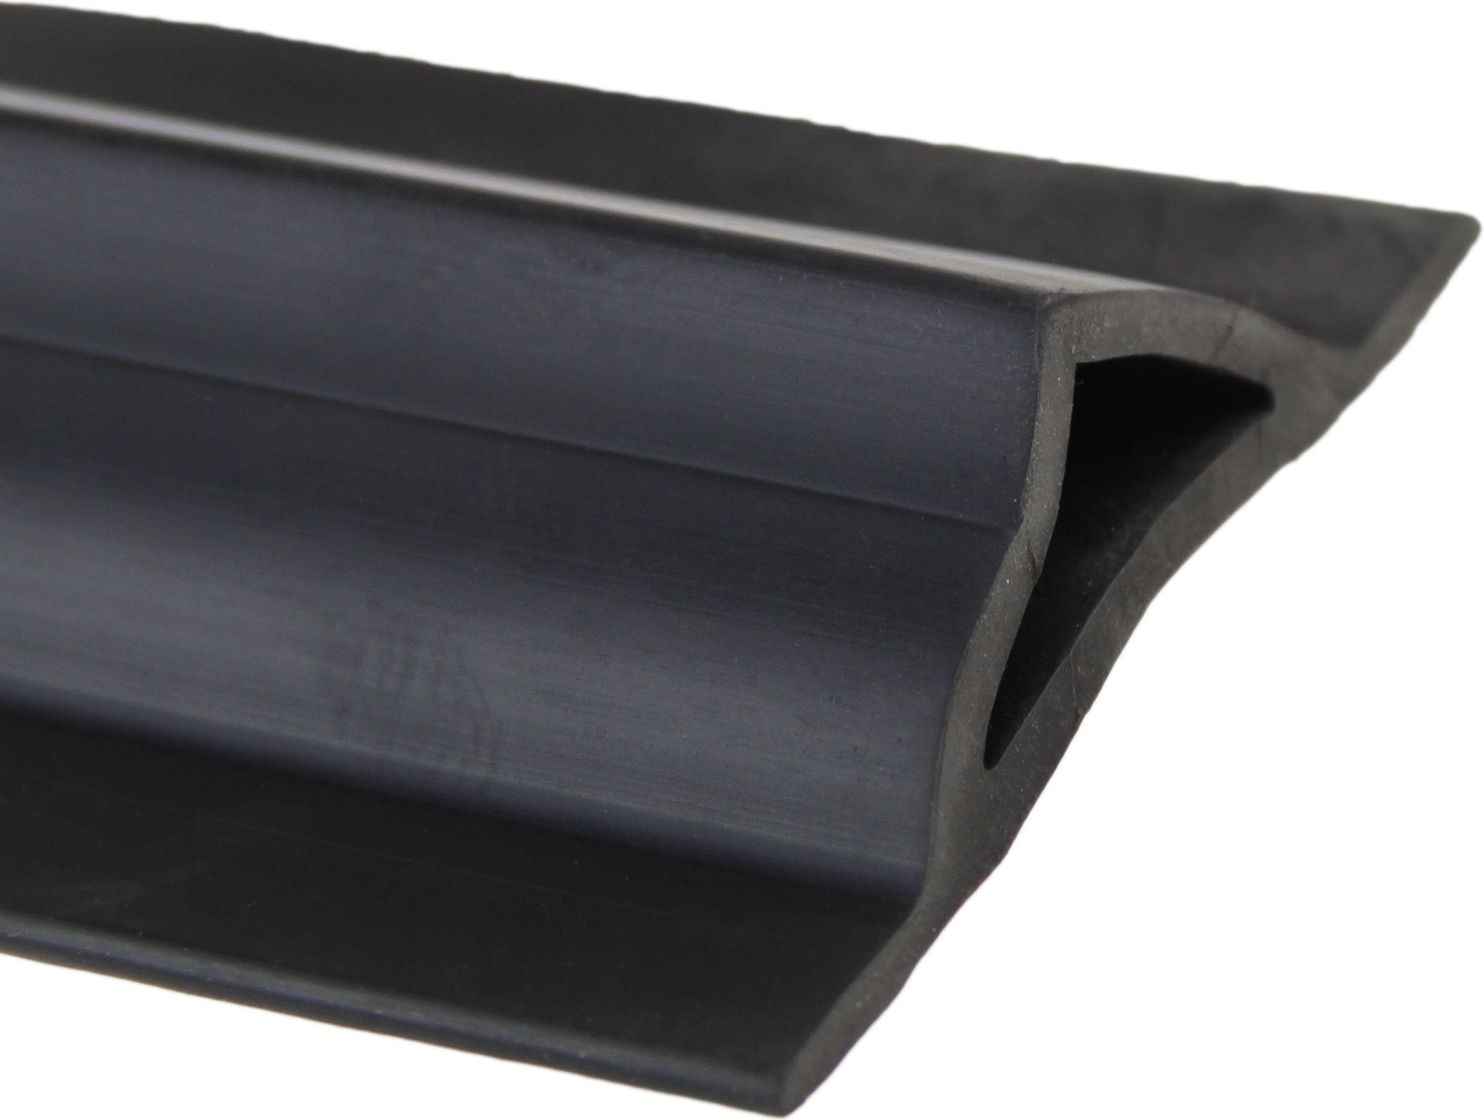 Лента дублирующая черная, 80 мм (редан) SSCL00008803 лента для бейджа ширина 20 мм длина 90 см с металлическим карабином черная